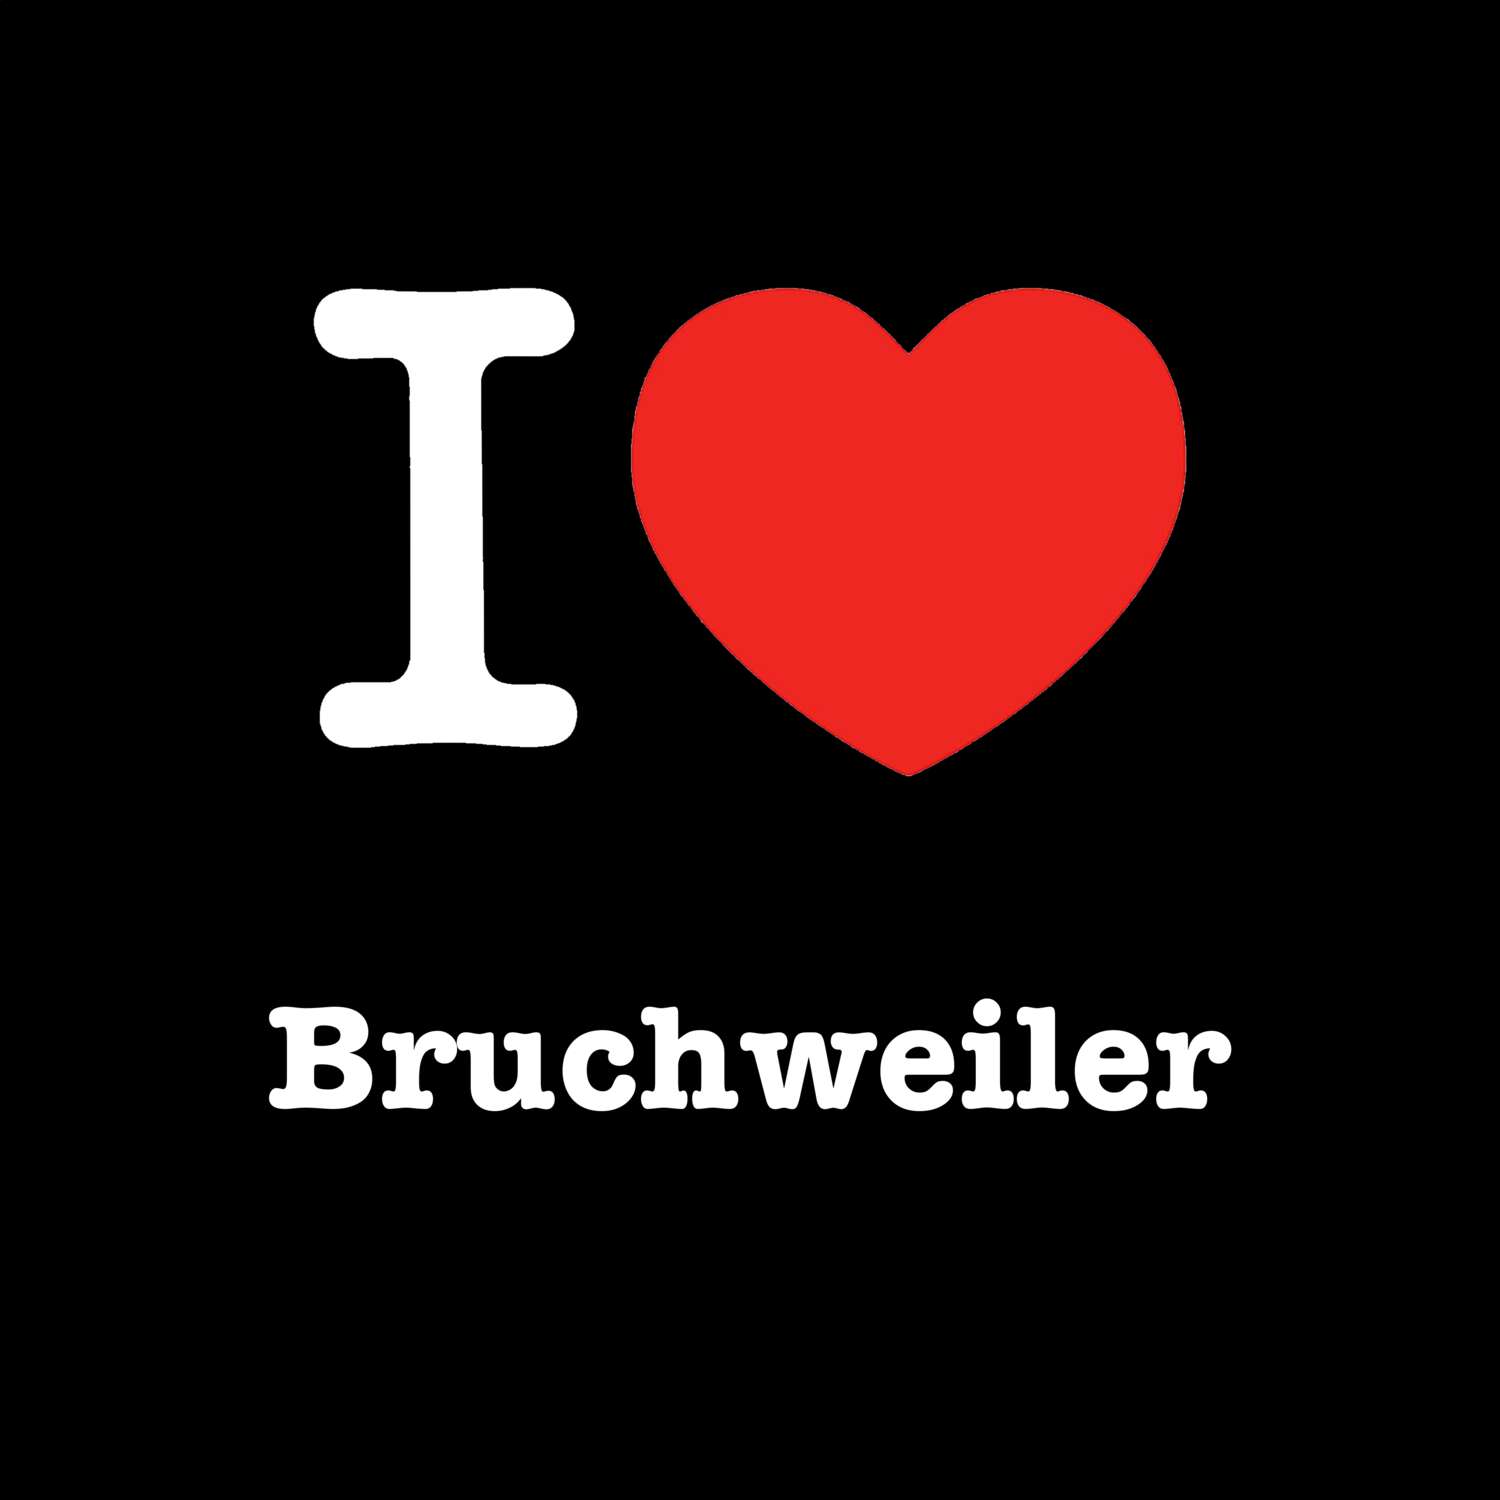 Bruchweiler T-Shirt »I love«